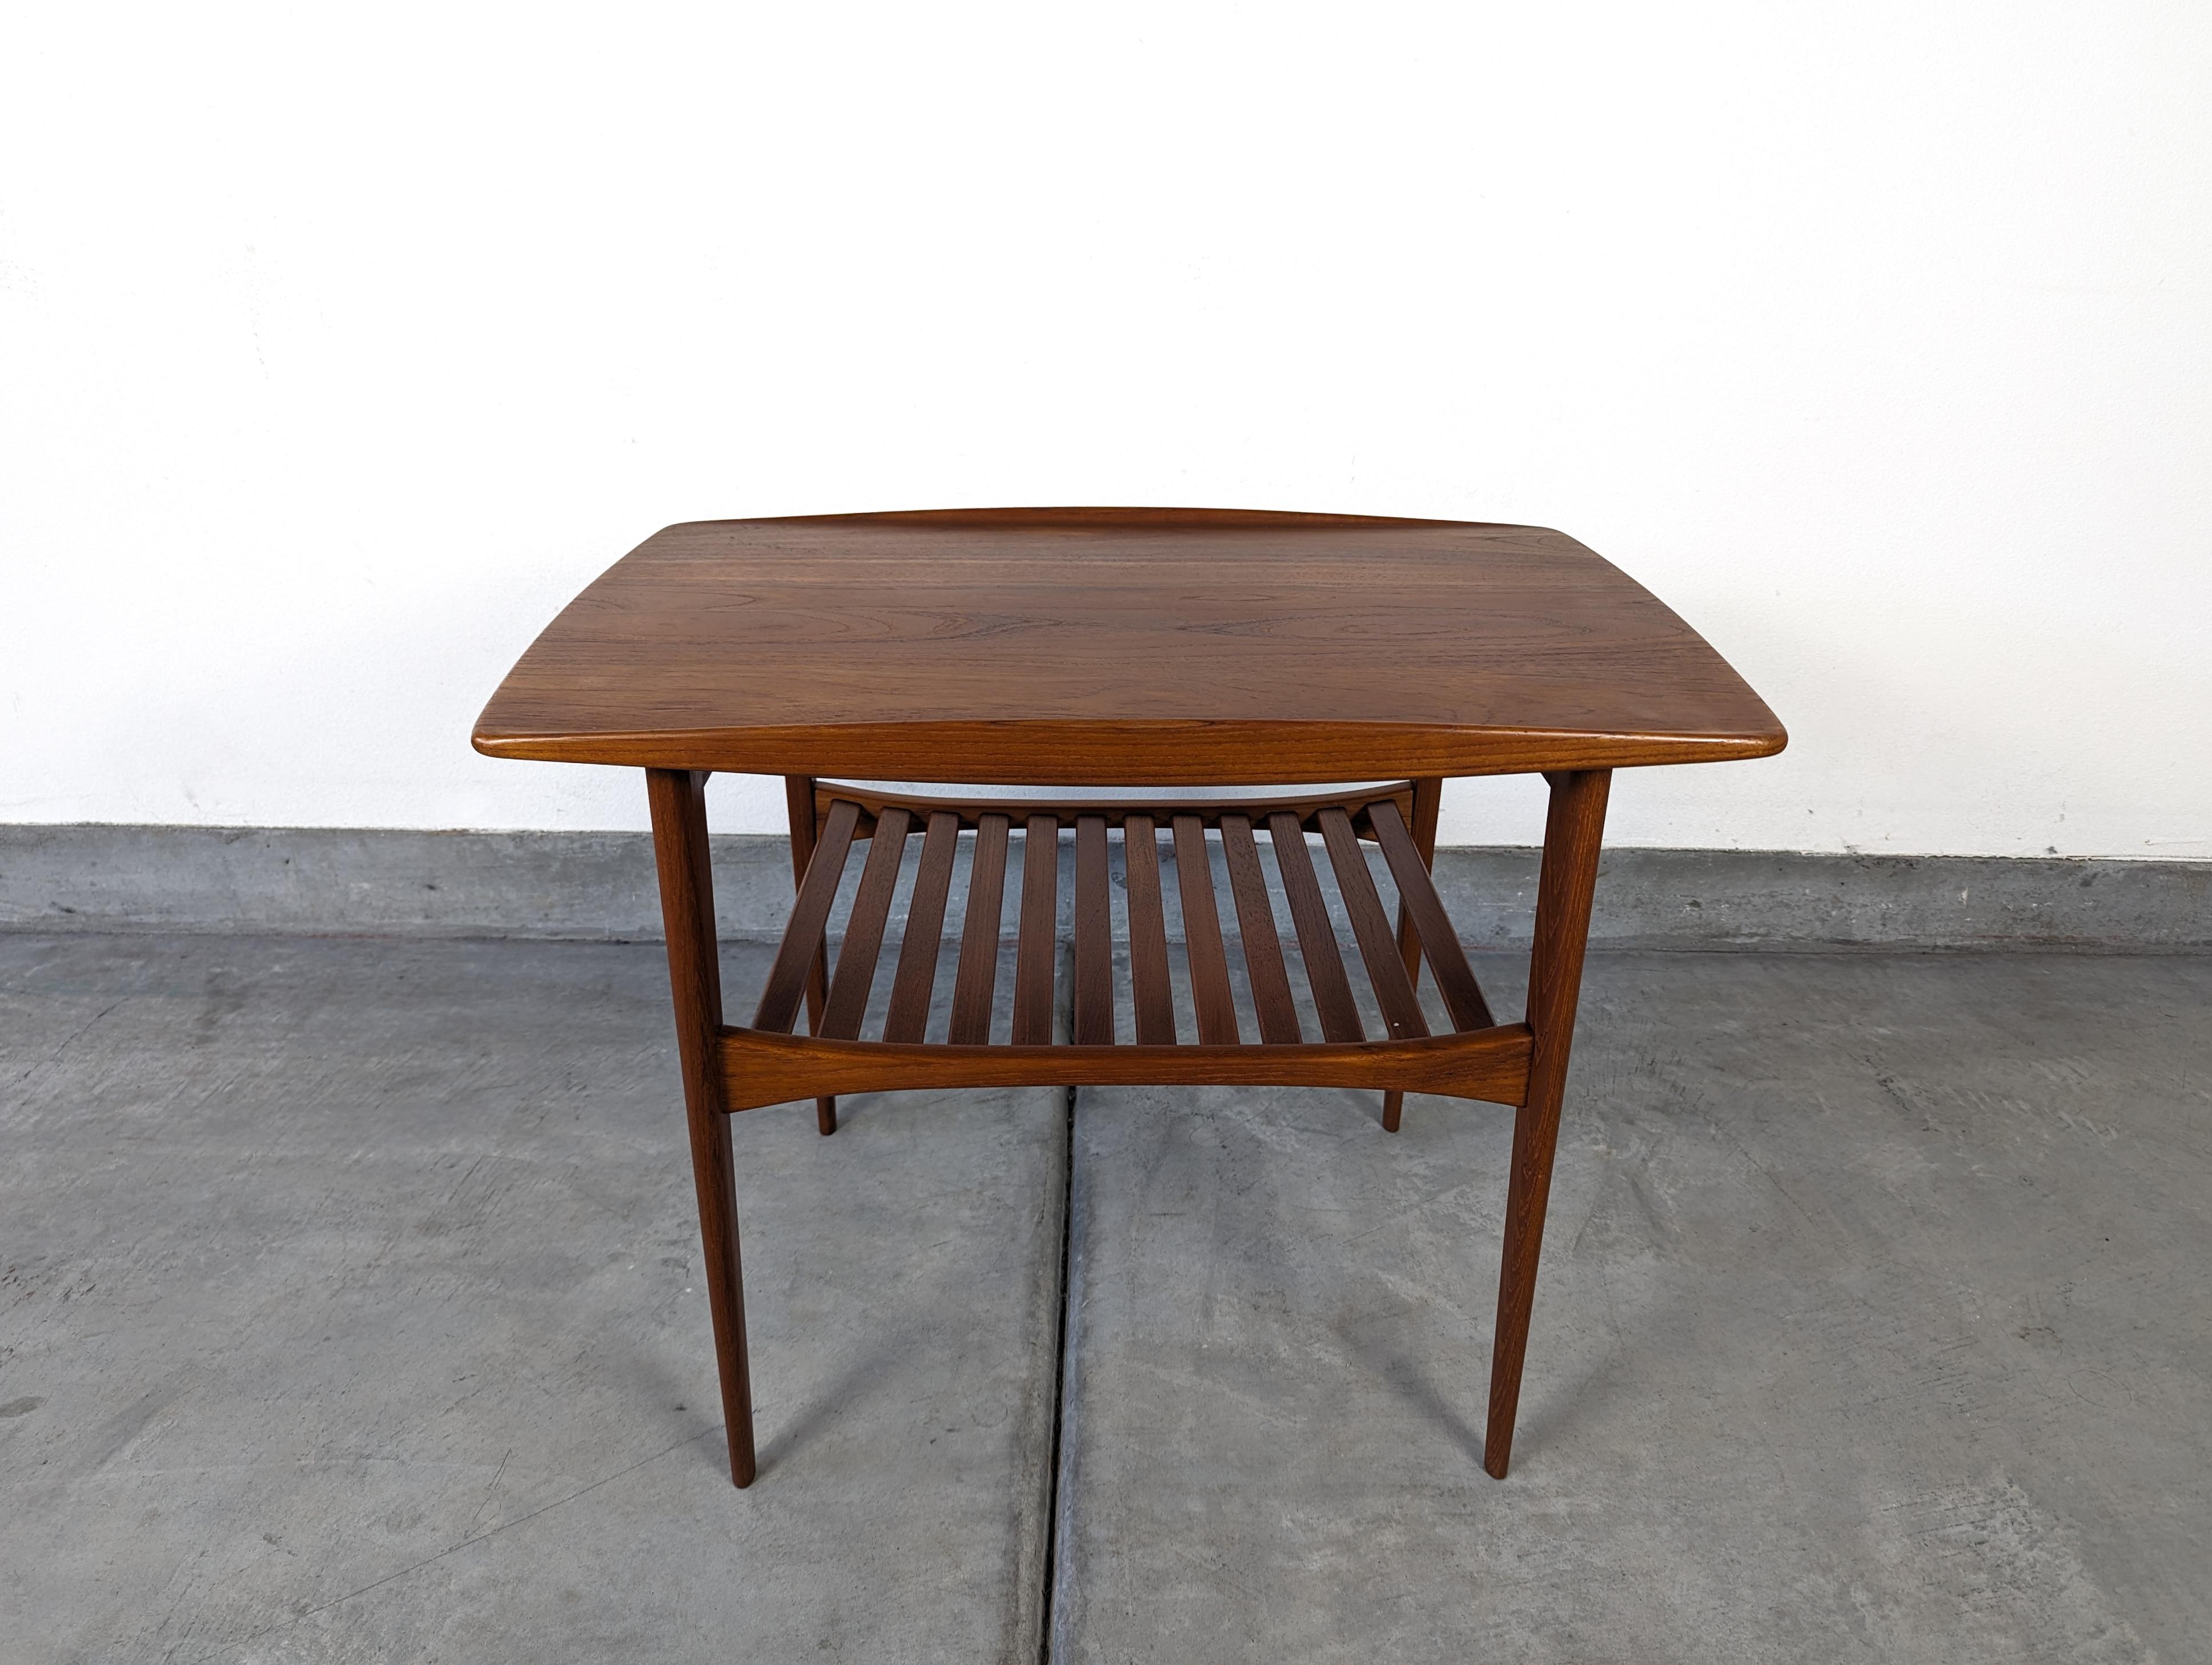 Danish Solid Teak Mid Century Side Table by Finn Juhl for France & Søn, c1950s For Sale 1